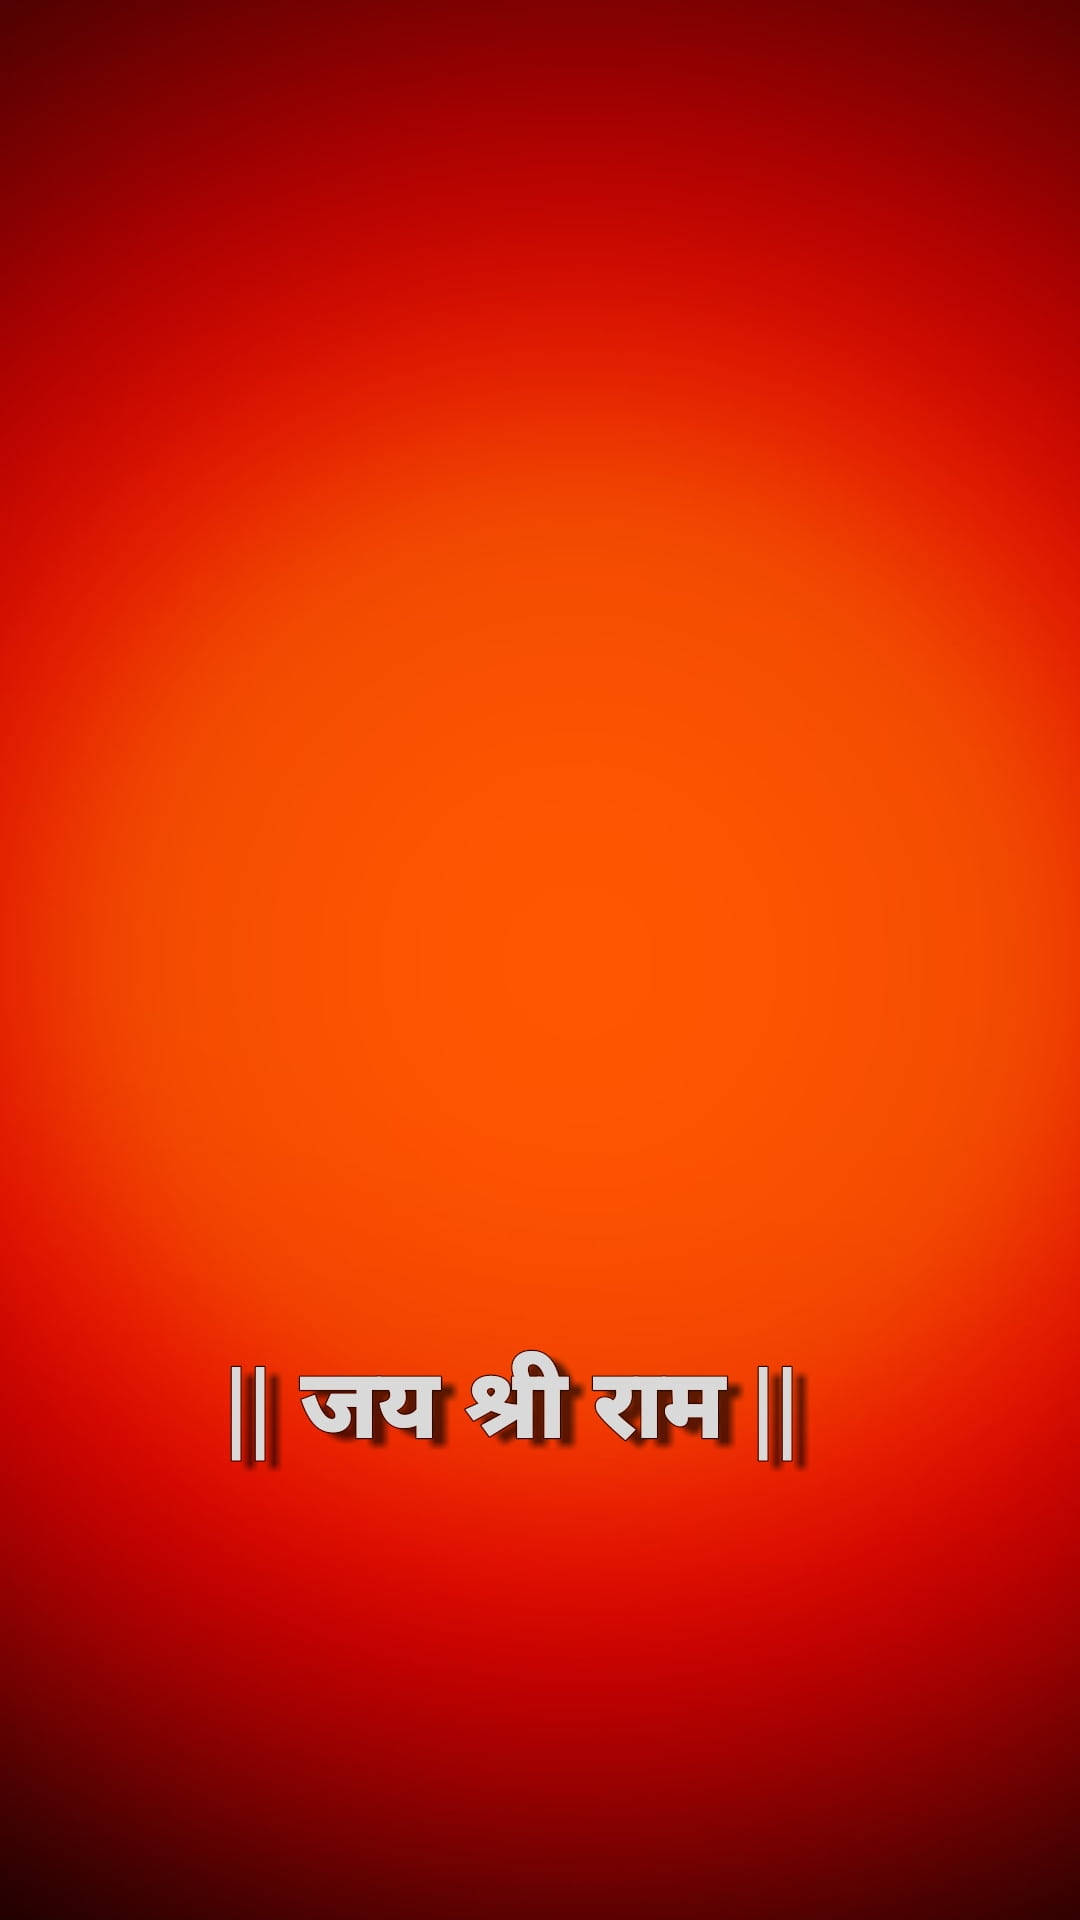 Shree Ram Orange Quote Wallpaper